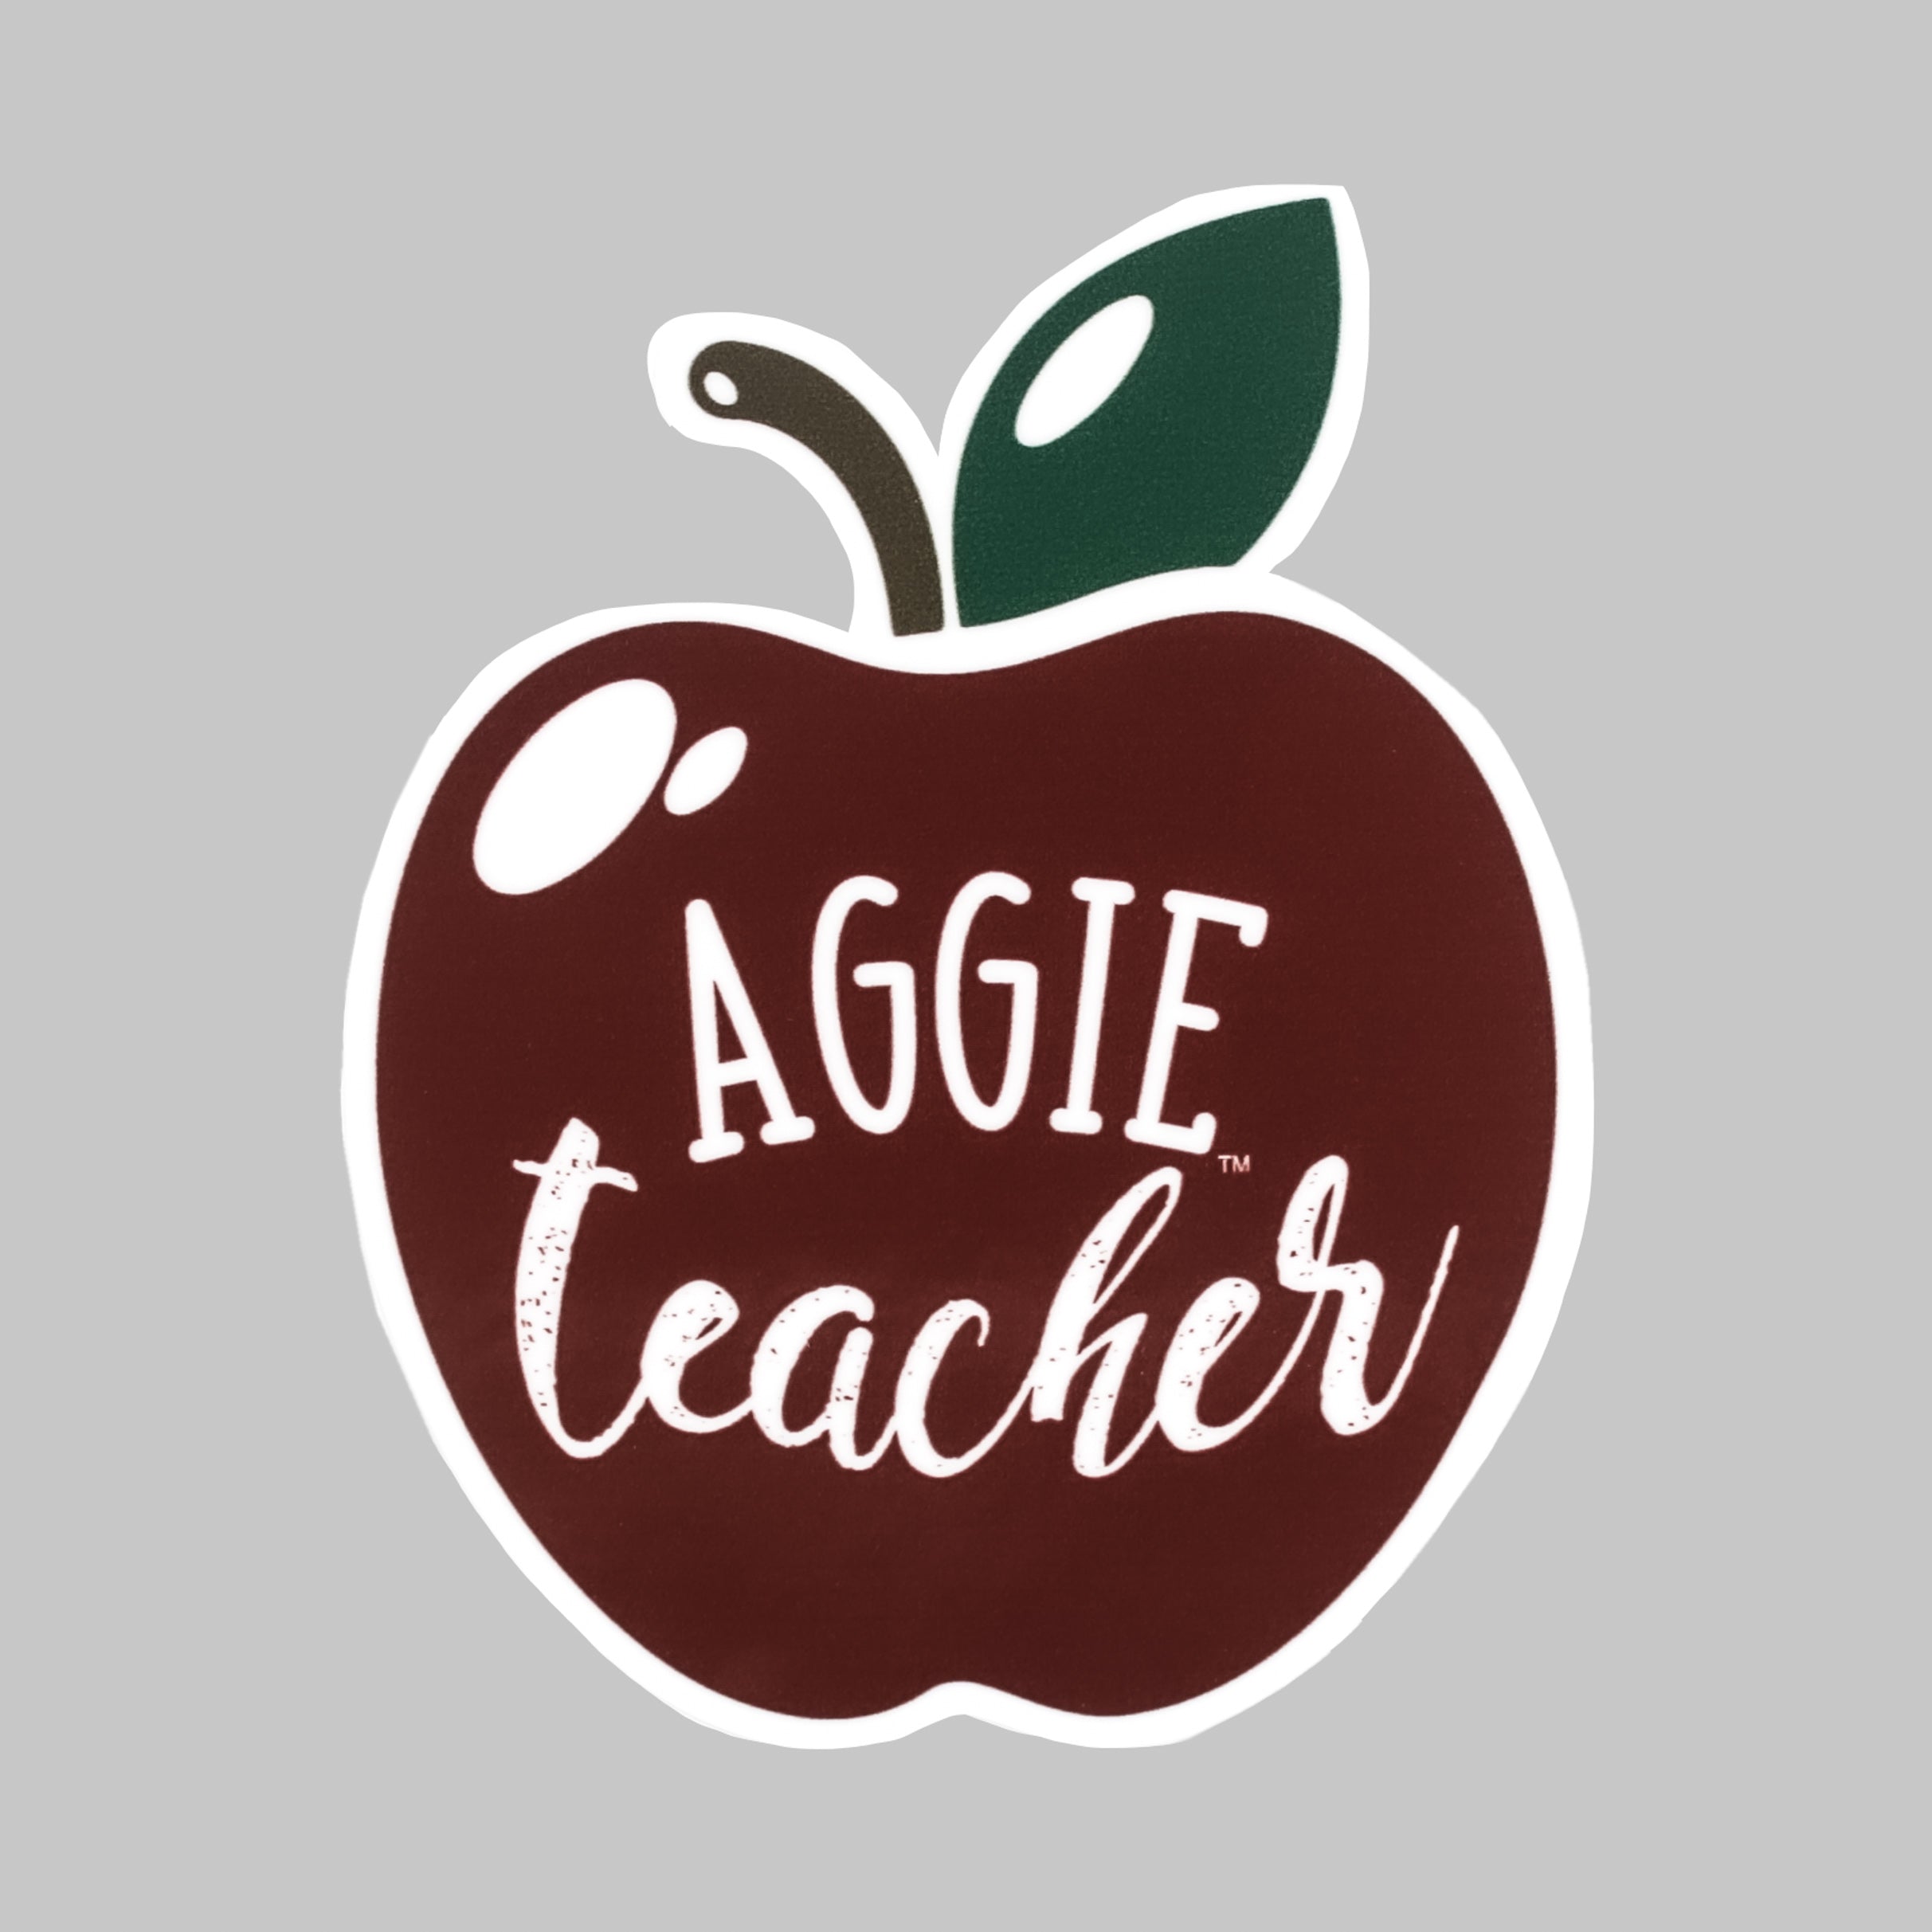 teachers apple clipart